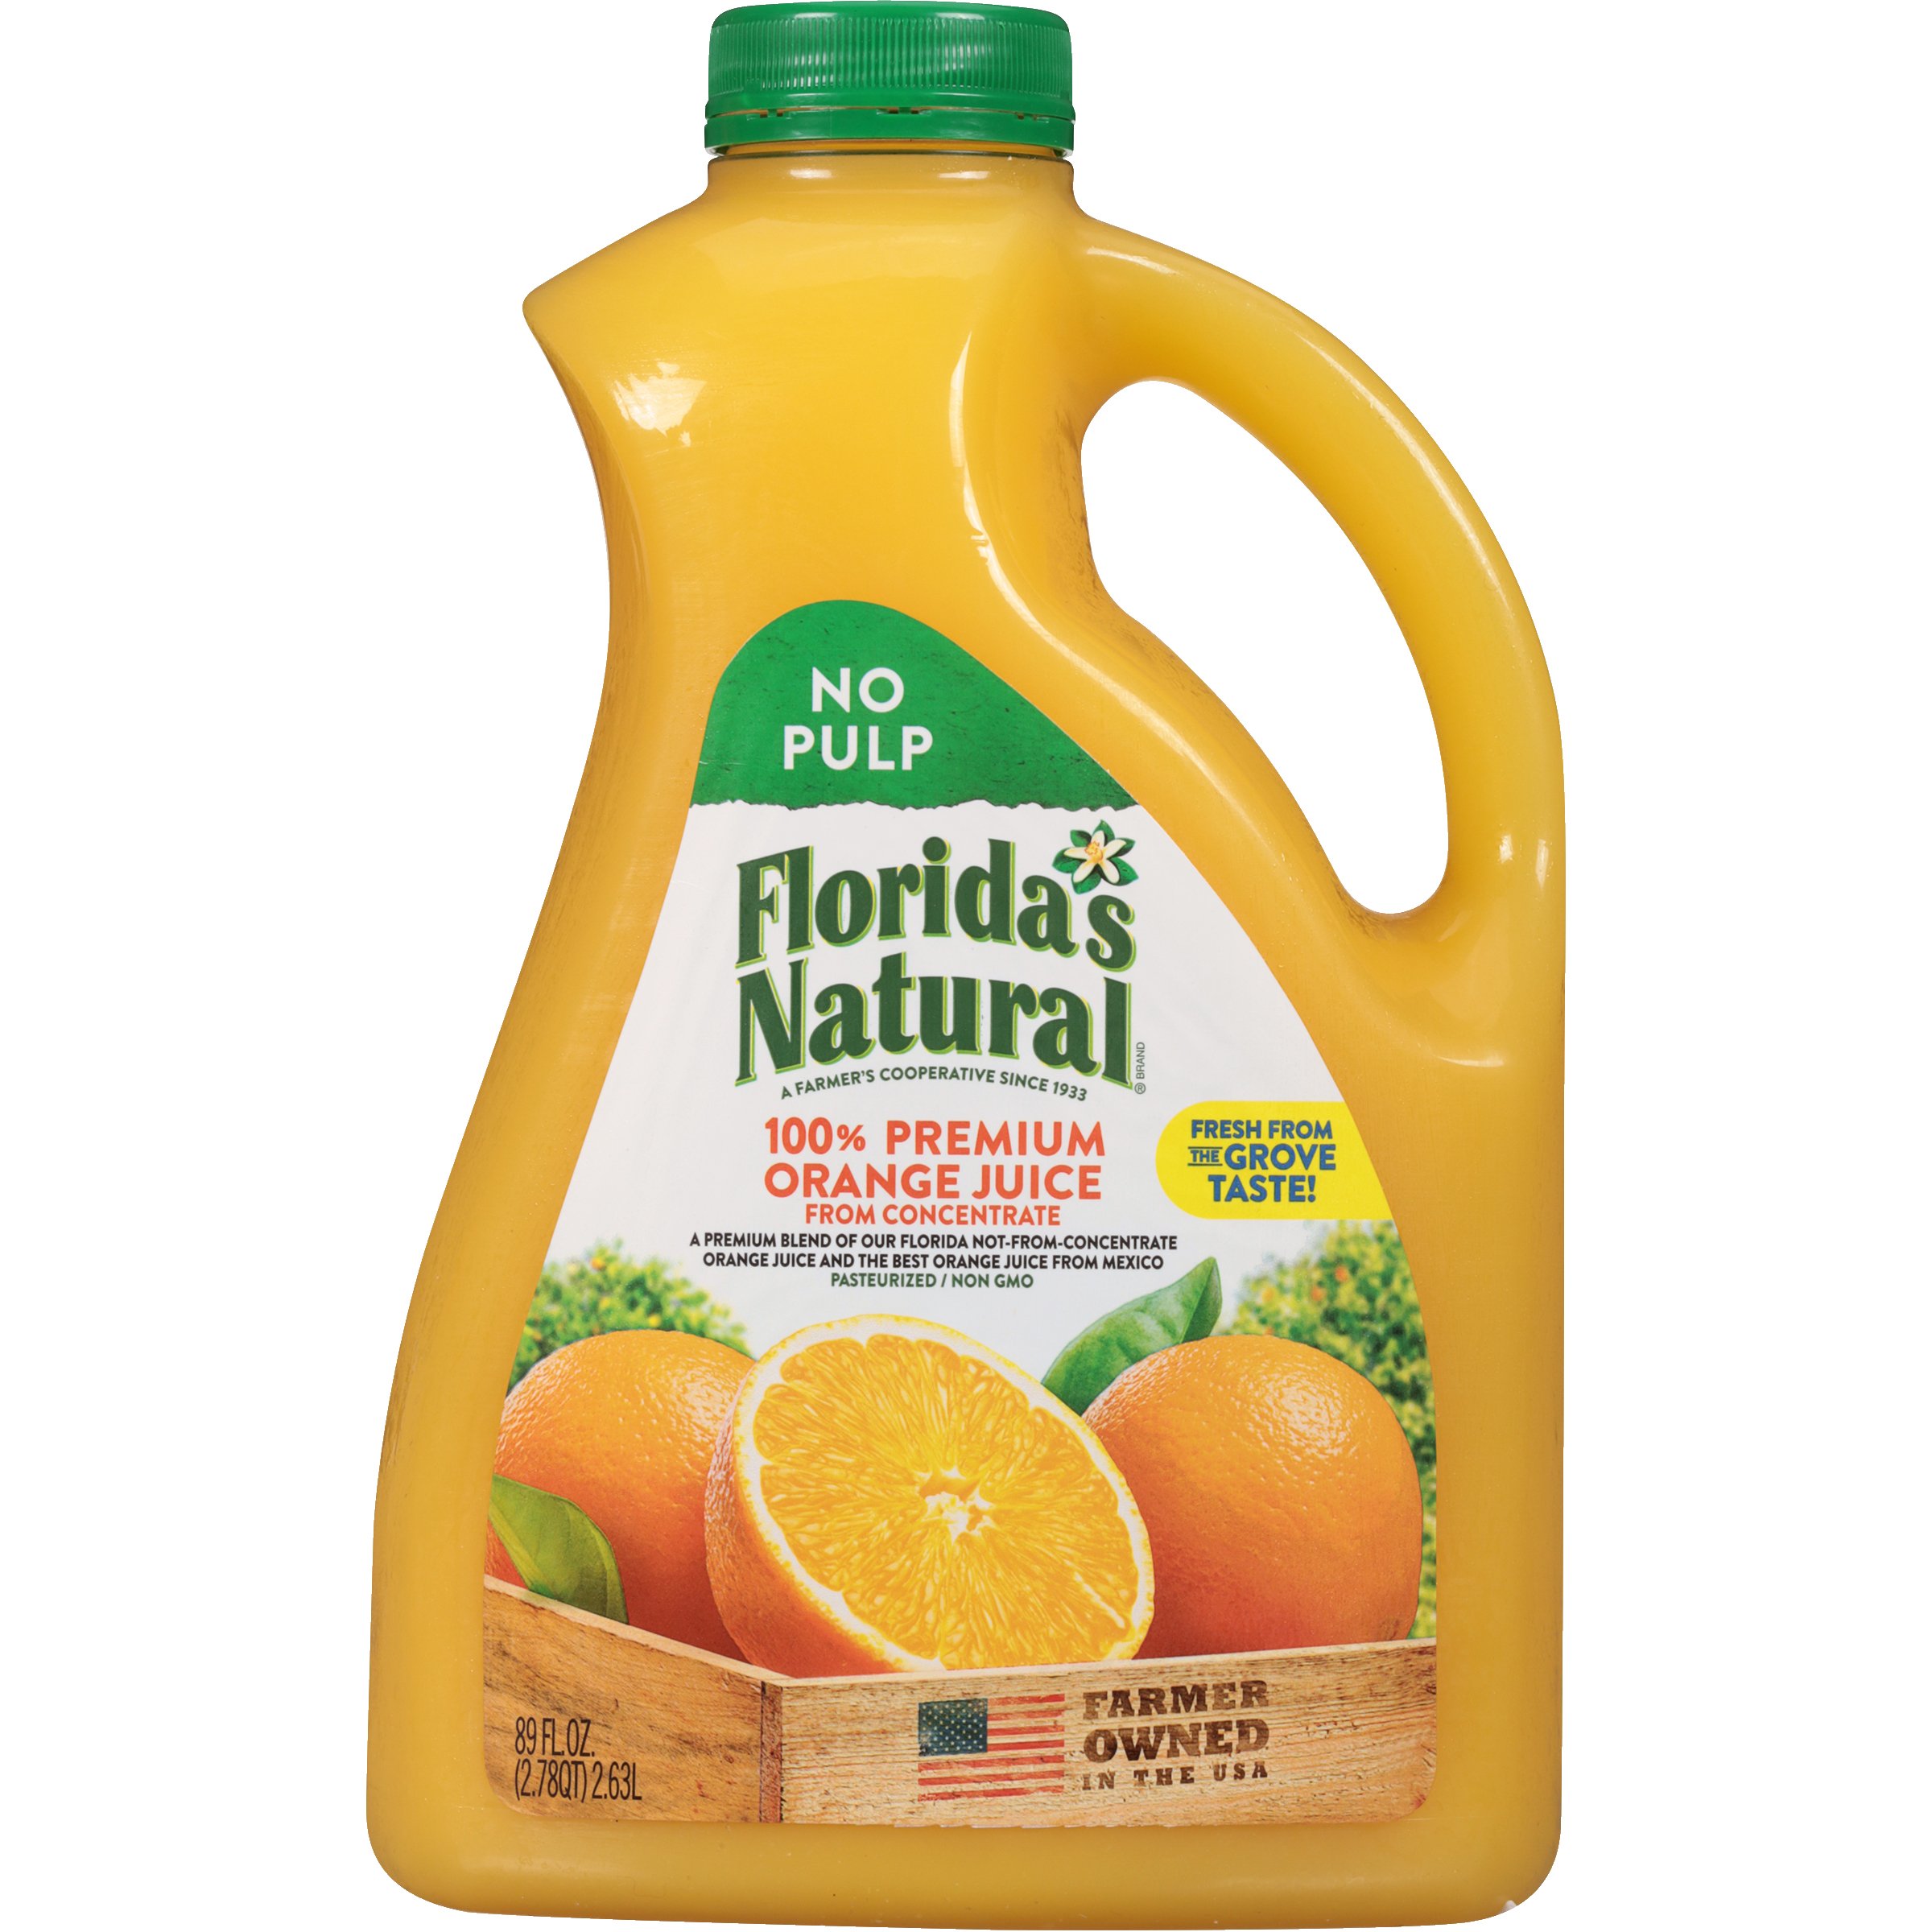 Florida's Natural Orange Juice No Pulp - Shop Juice at H-E-B